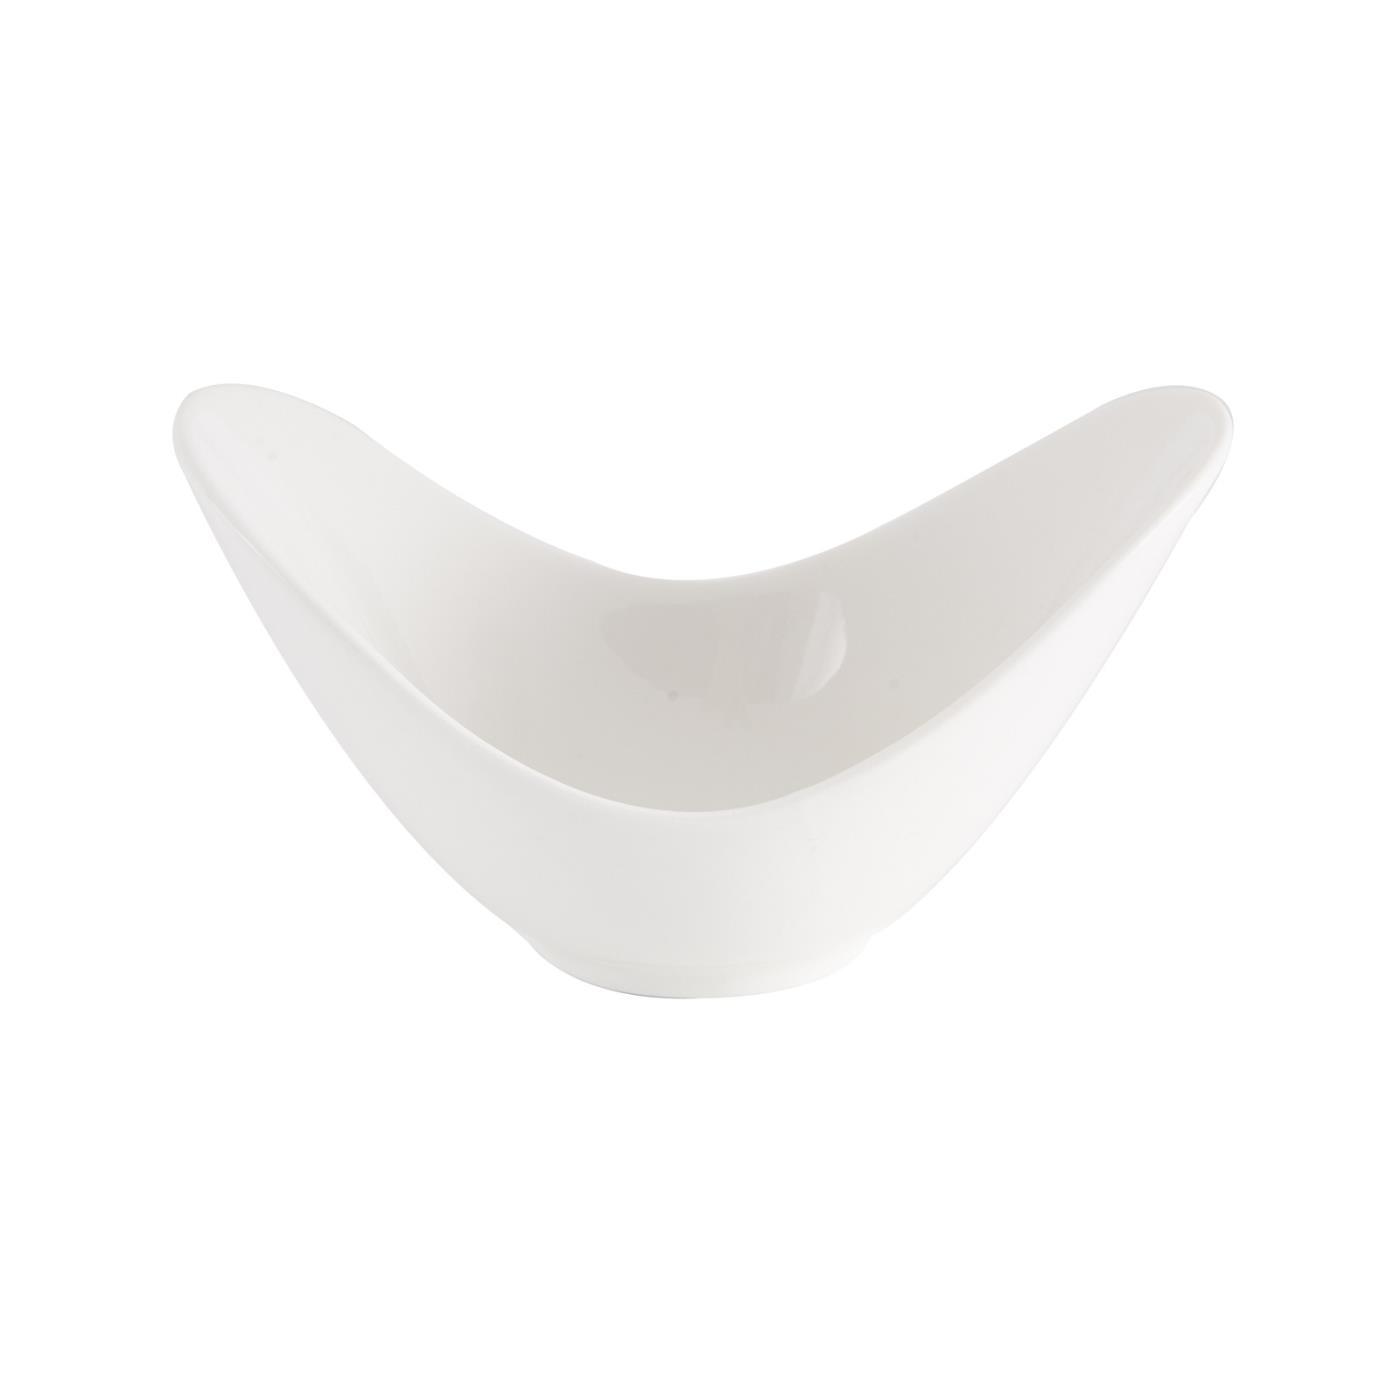 White Ceramic Spirit Bowl - 6"